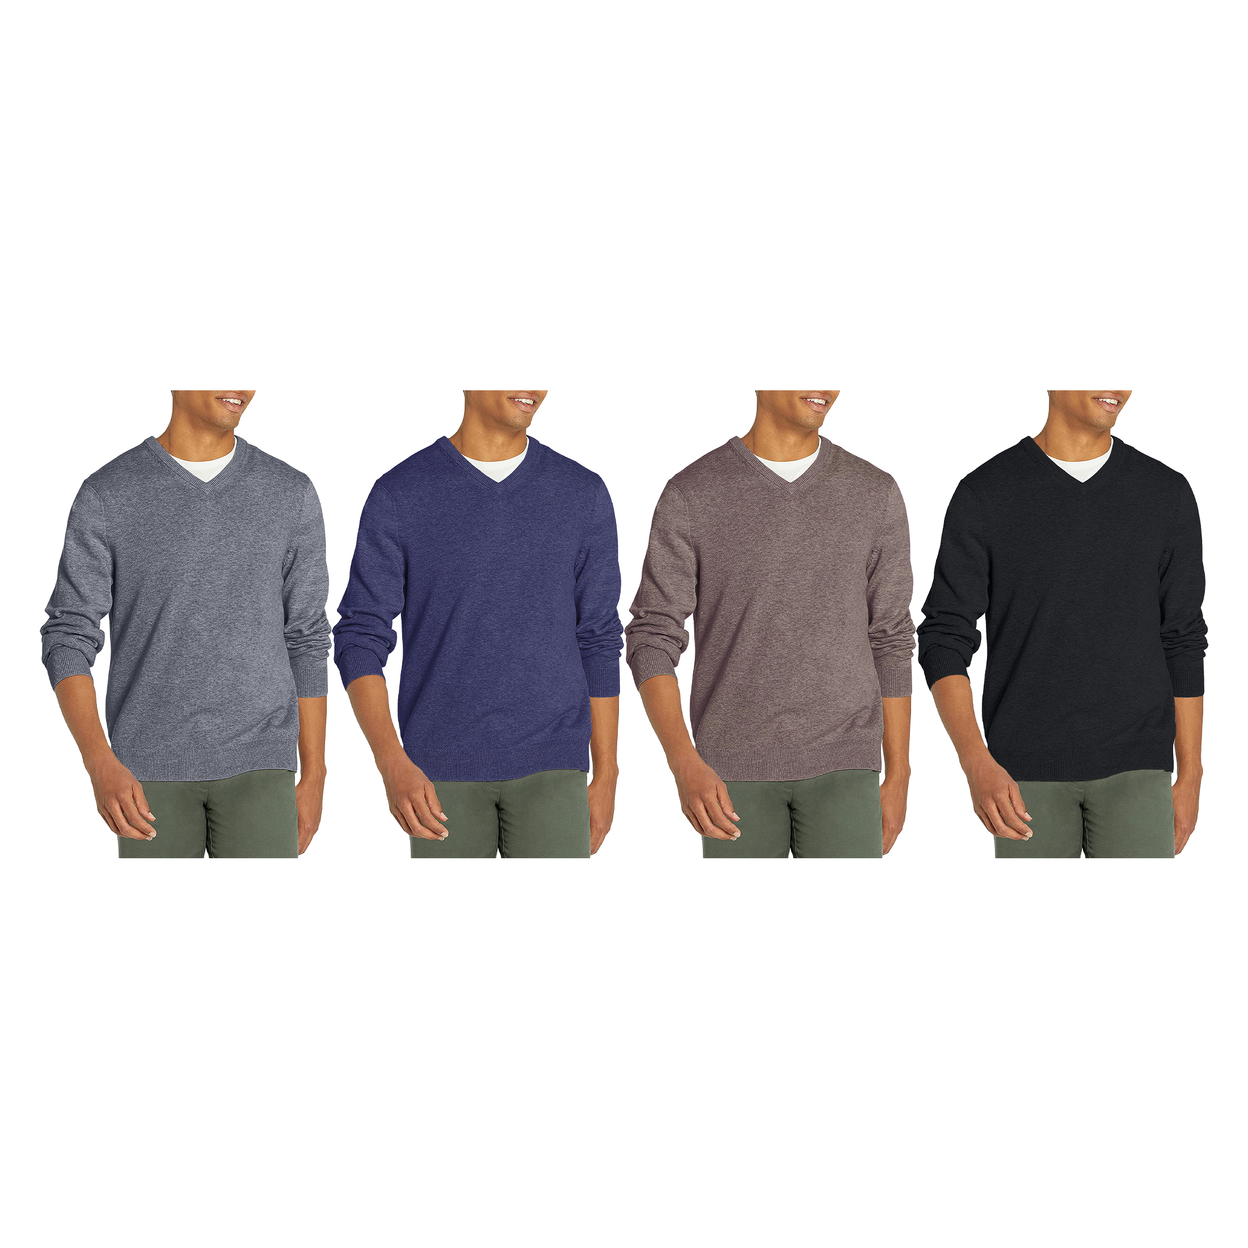 2-Pack: Men's Casual Ultra Soft Slim Fit Warm Knit V-Neck Sweater - Black & Blue, X-large